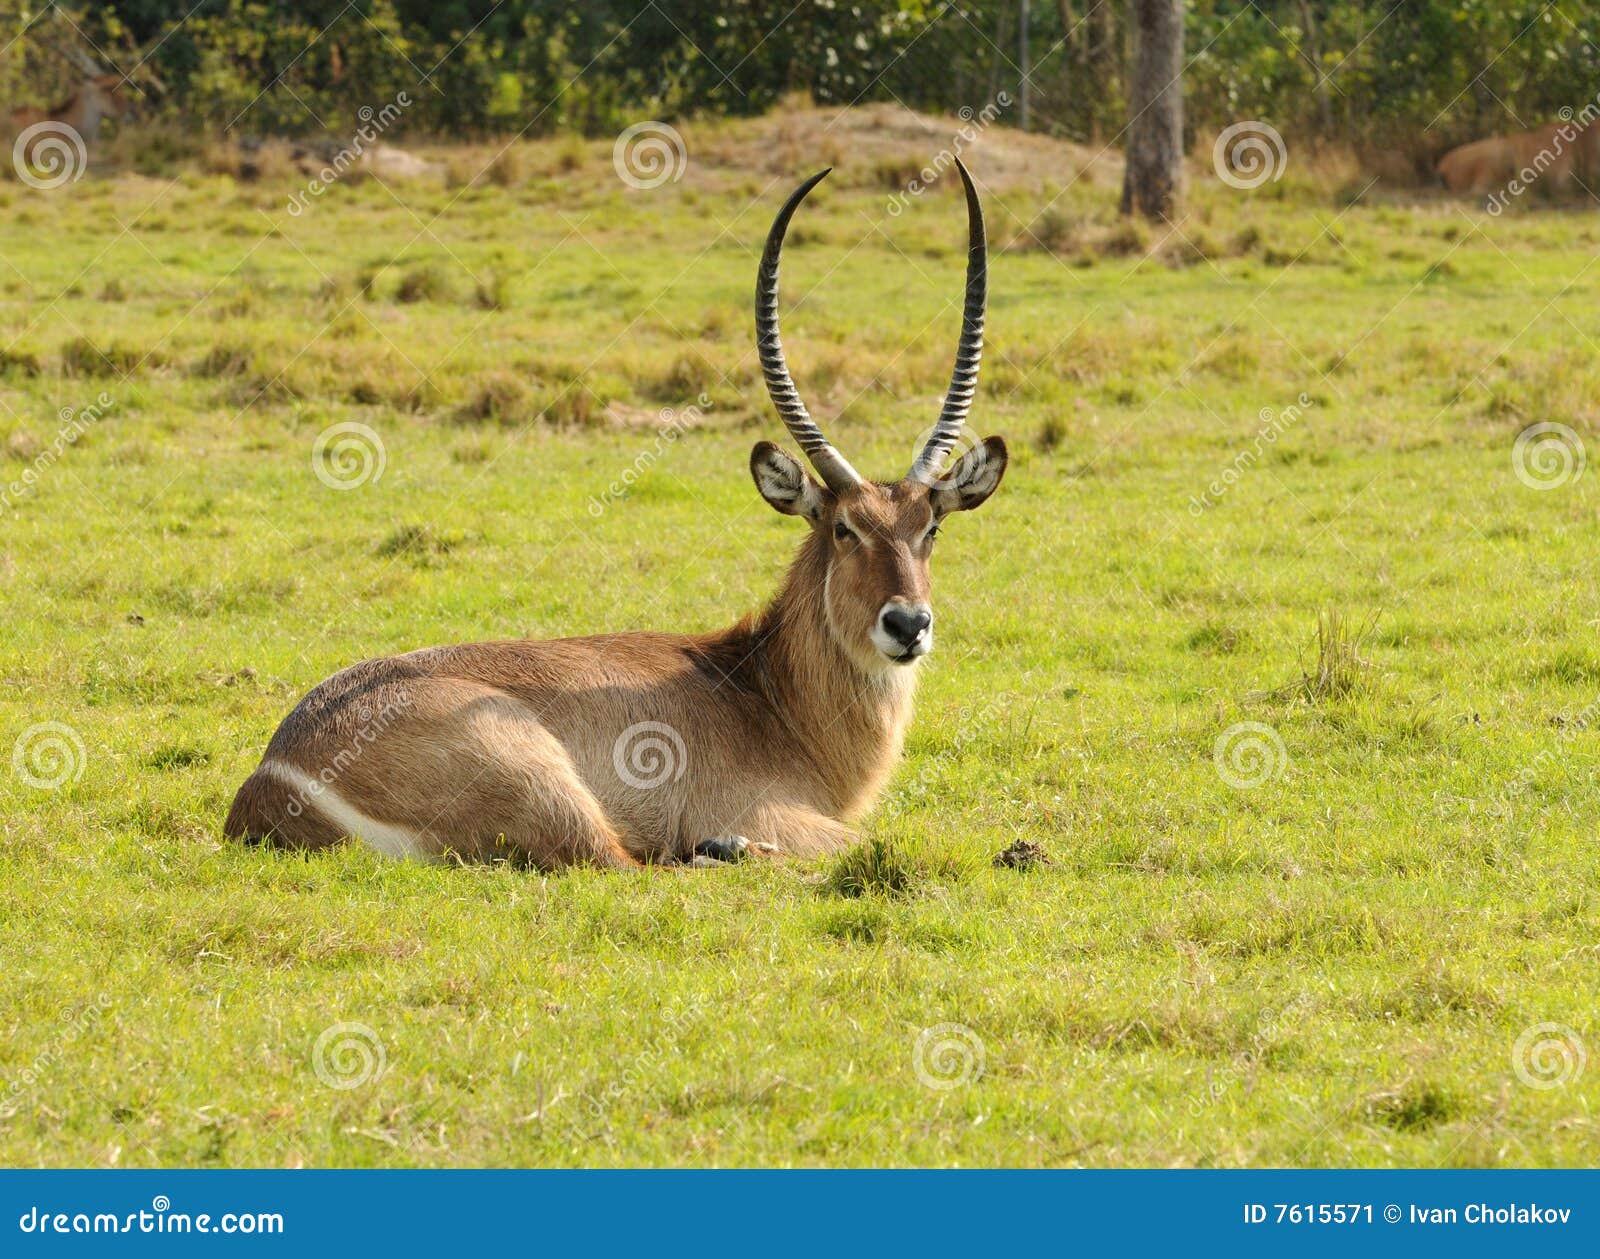 antilope resting